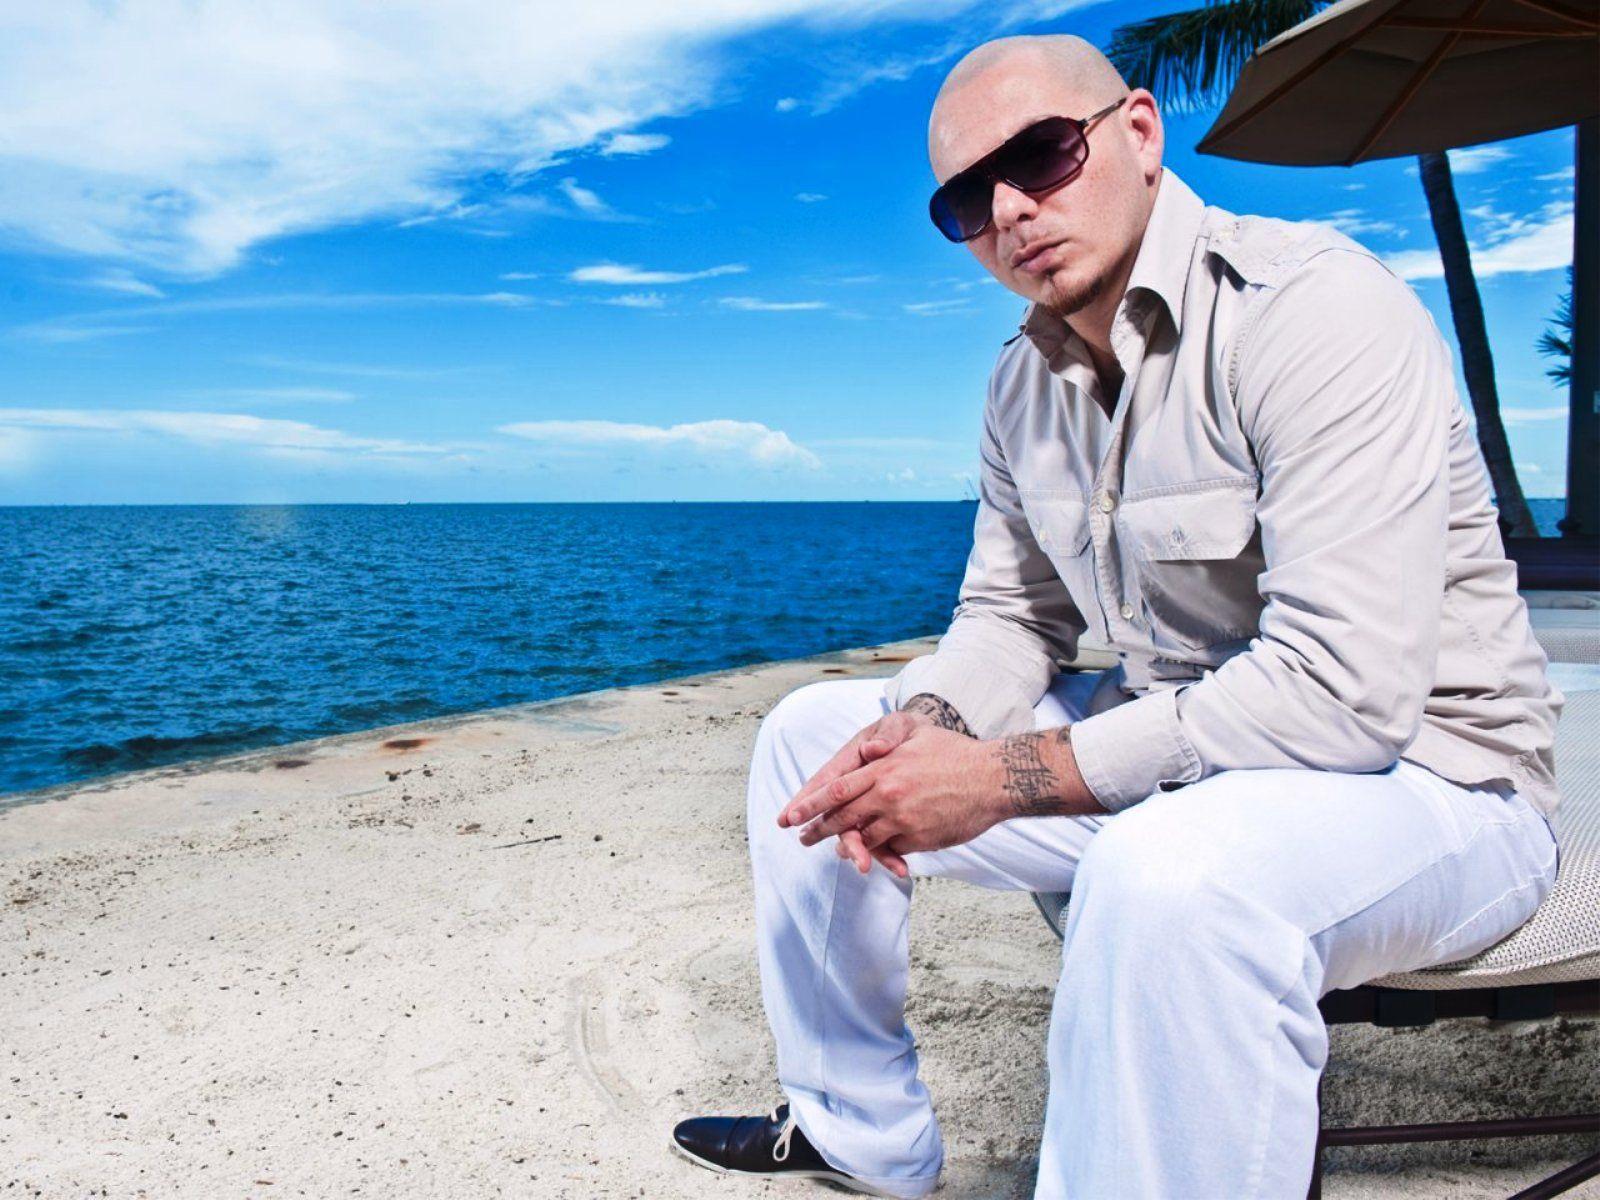 Pitbull On The Beach